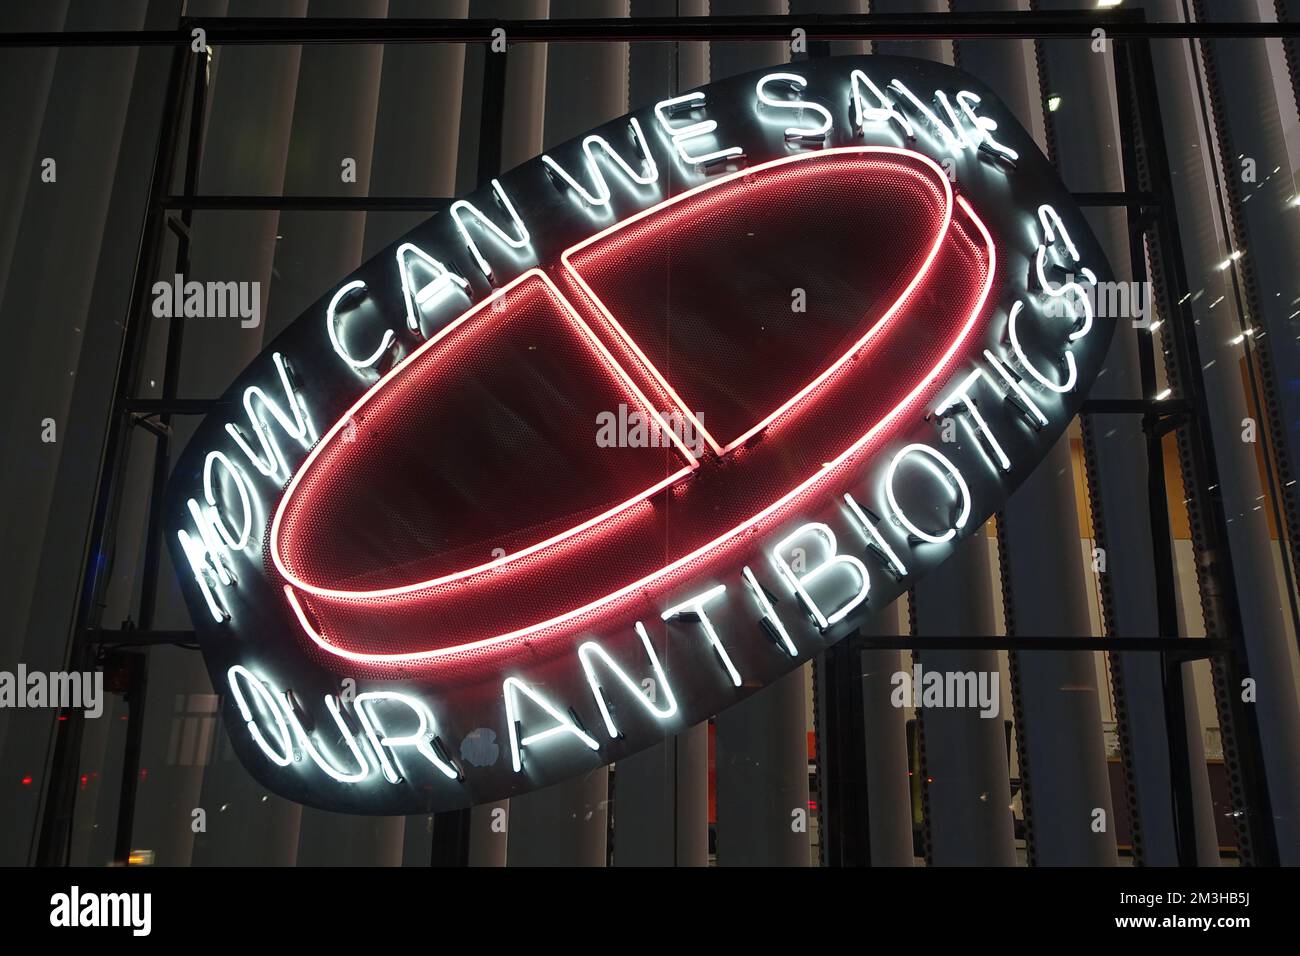 Antibiotics display, Wellcome building, London Stock Photo